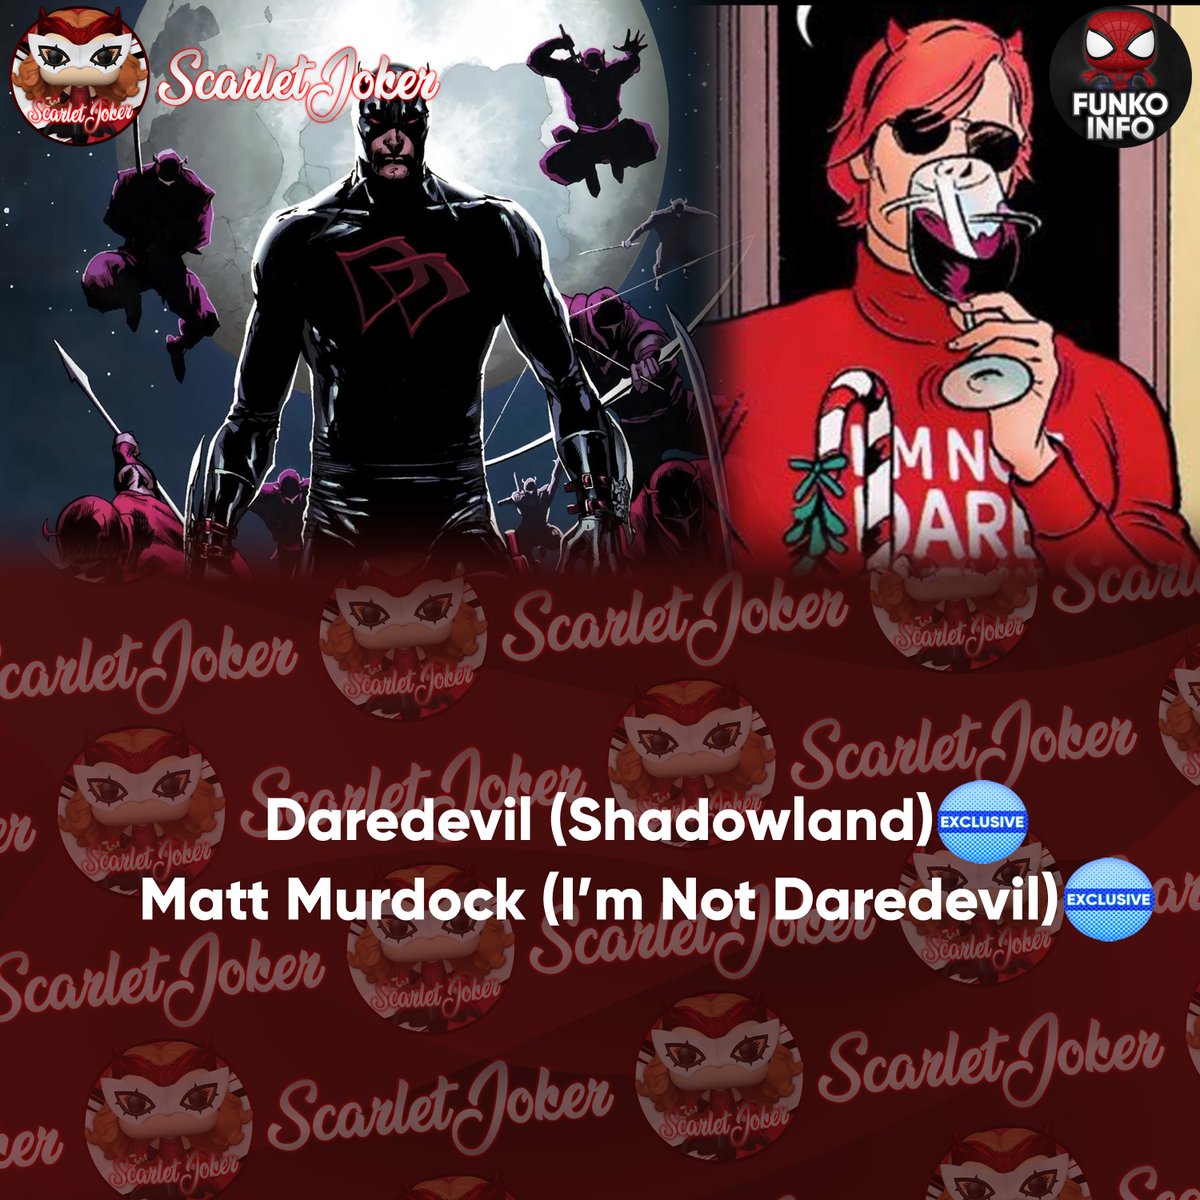 Coming Soon: Daredevil Exclusives!
#Funko #FunkoPop #MARVEL #MARVELComics #Daredevil #MattMurdock